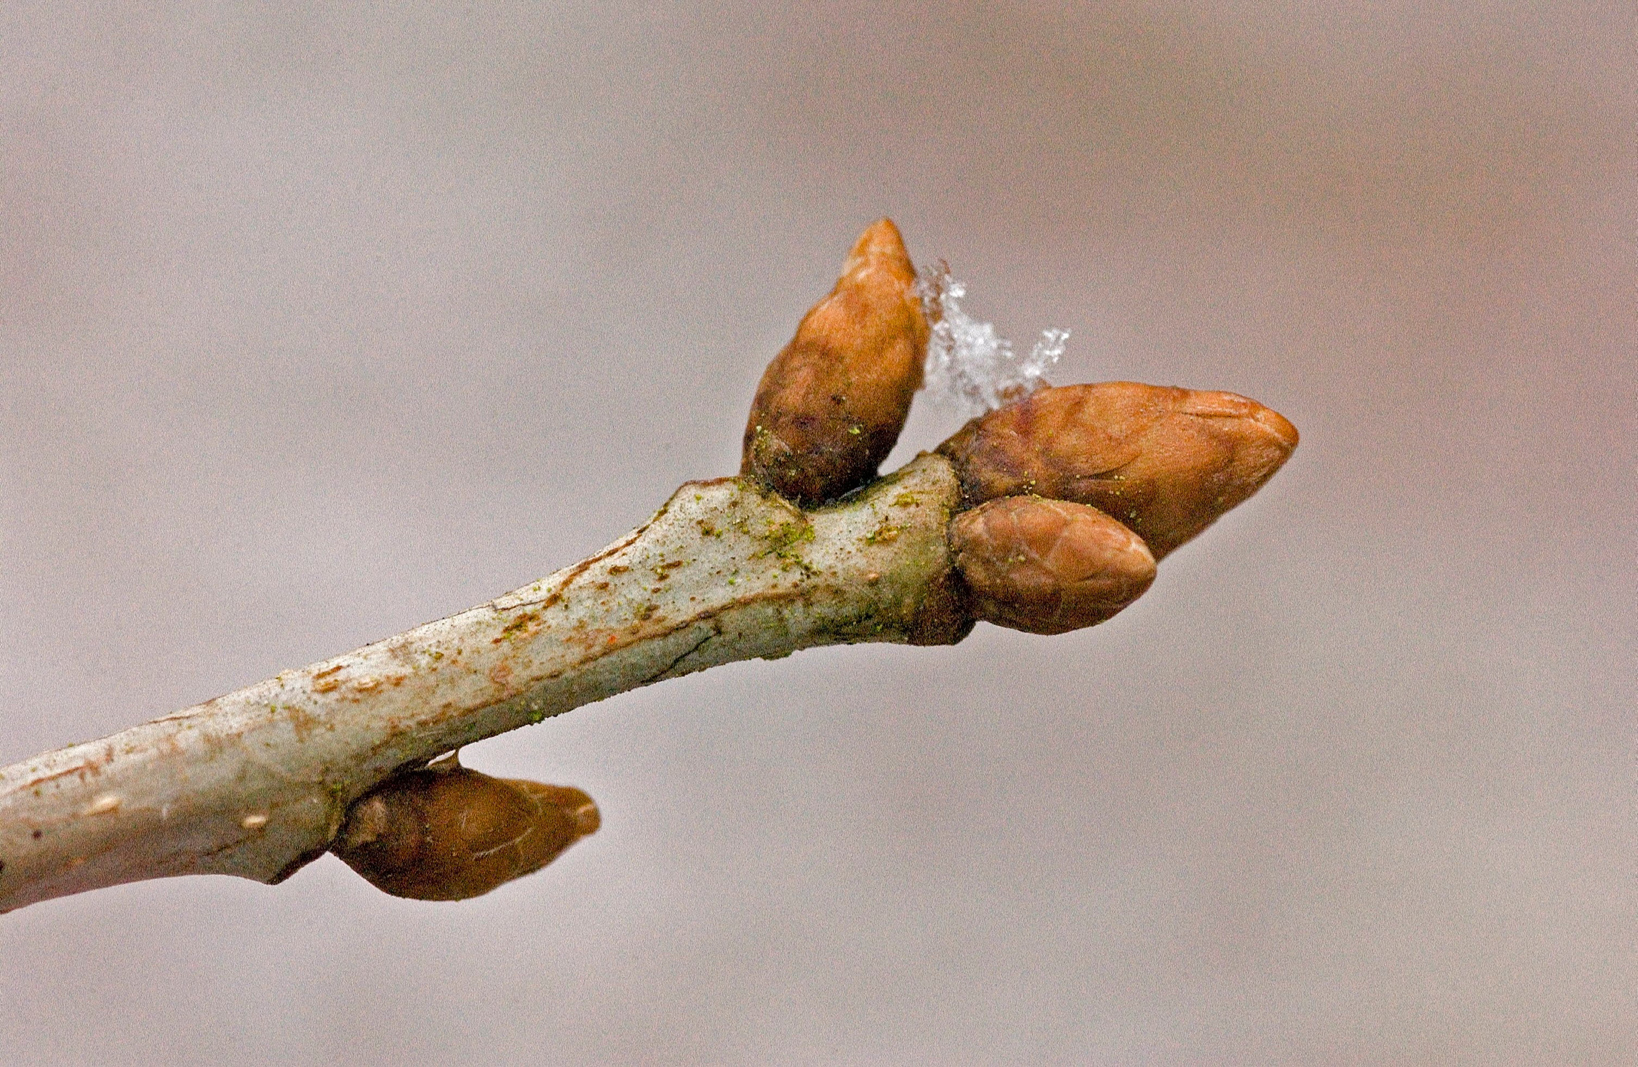 Winter buds of the pedunculate oak (Quercus robur).